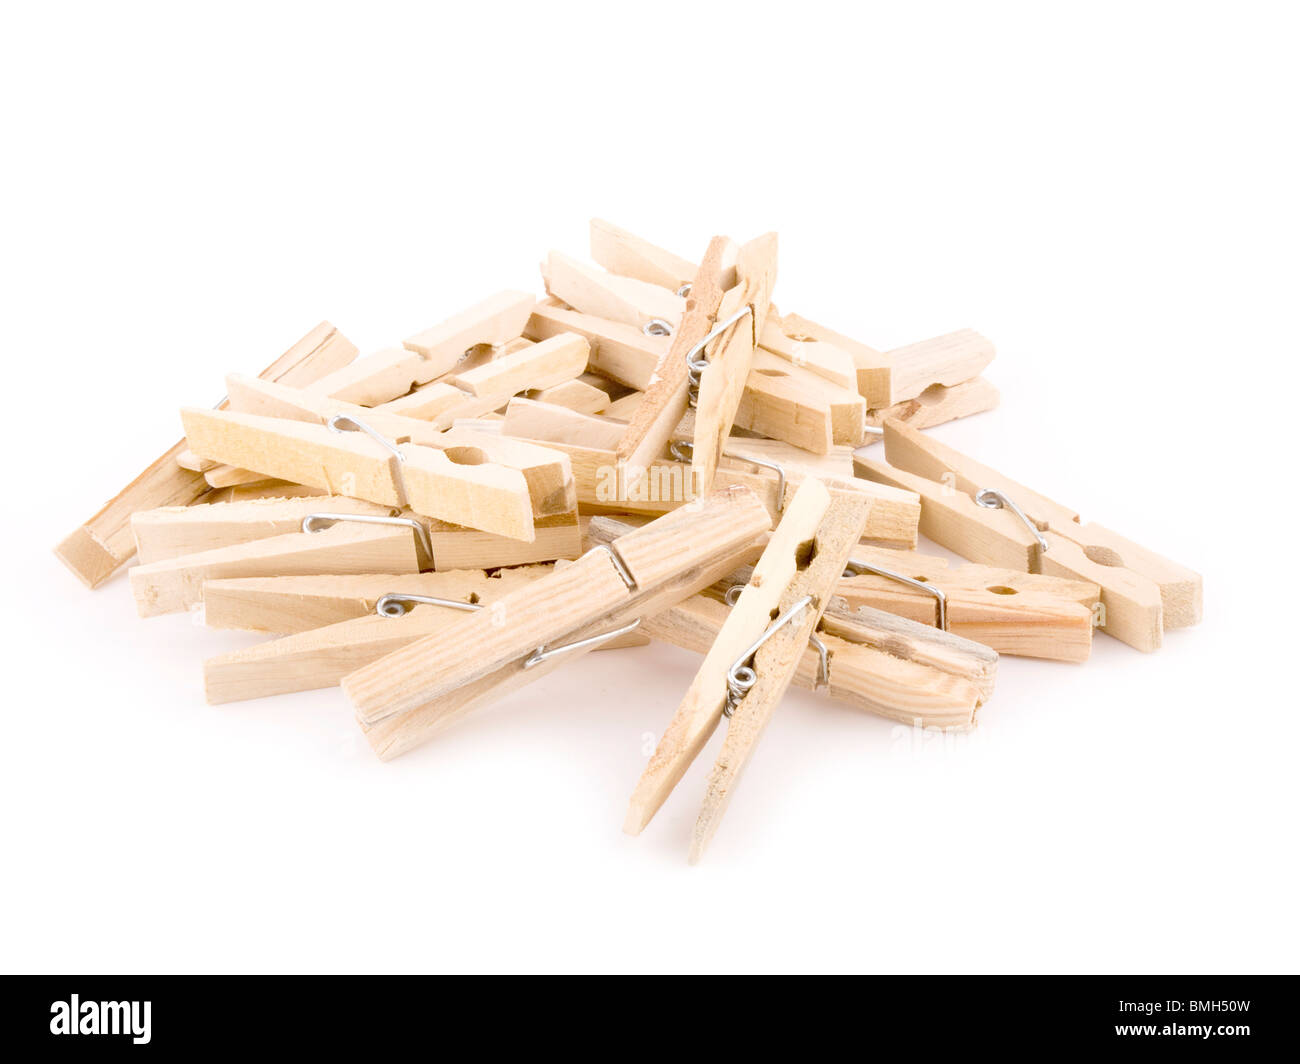 Imagen de espigas de madera sobre fondo blanco Fotografía de stock - Alamy